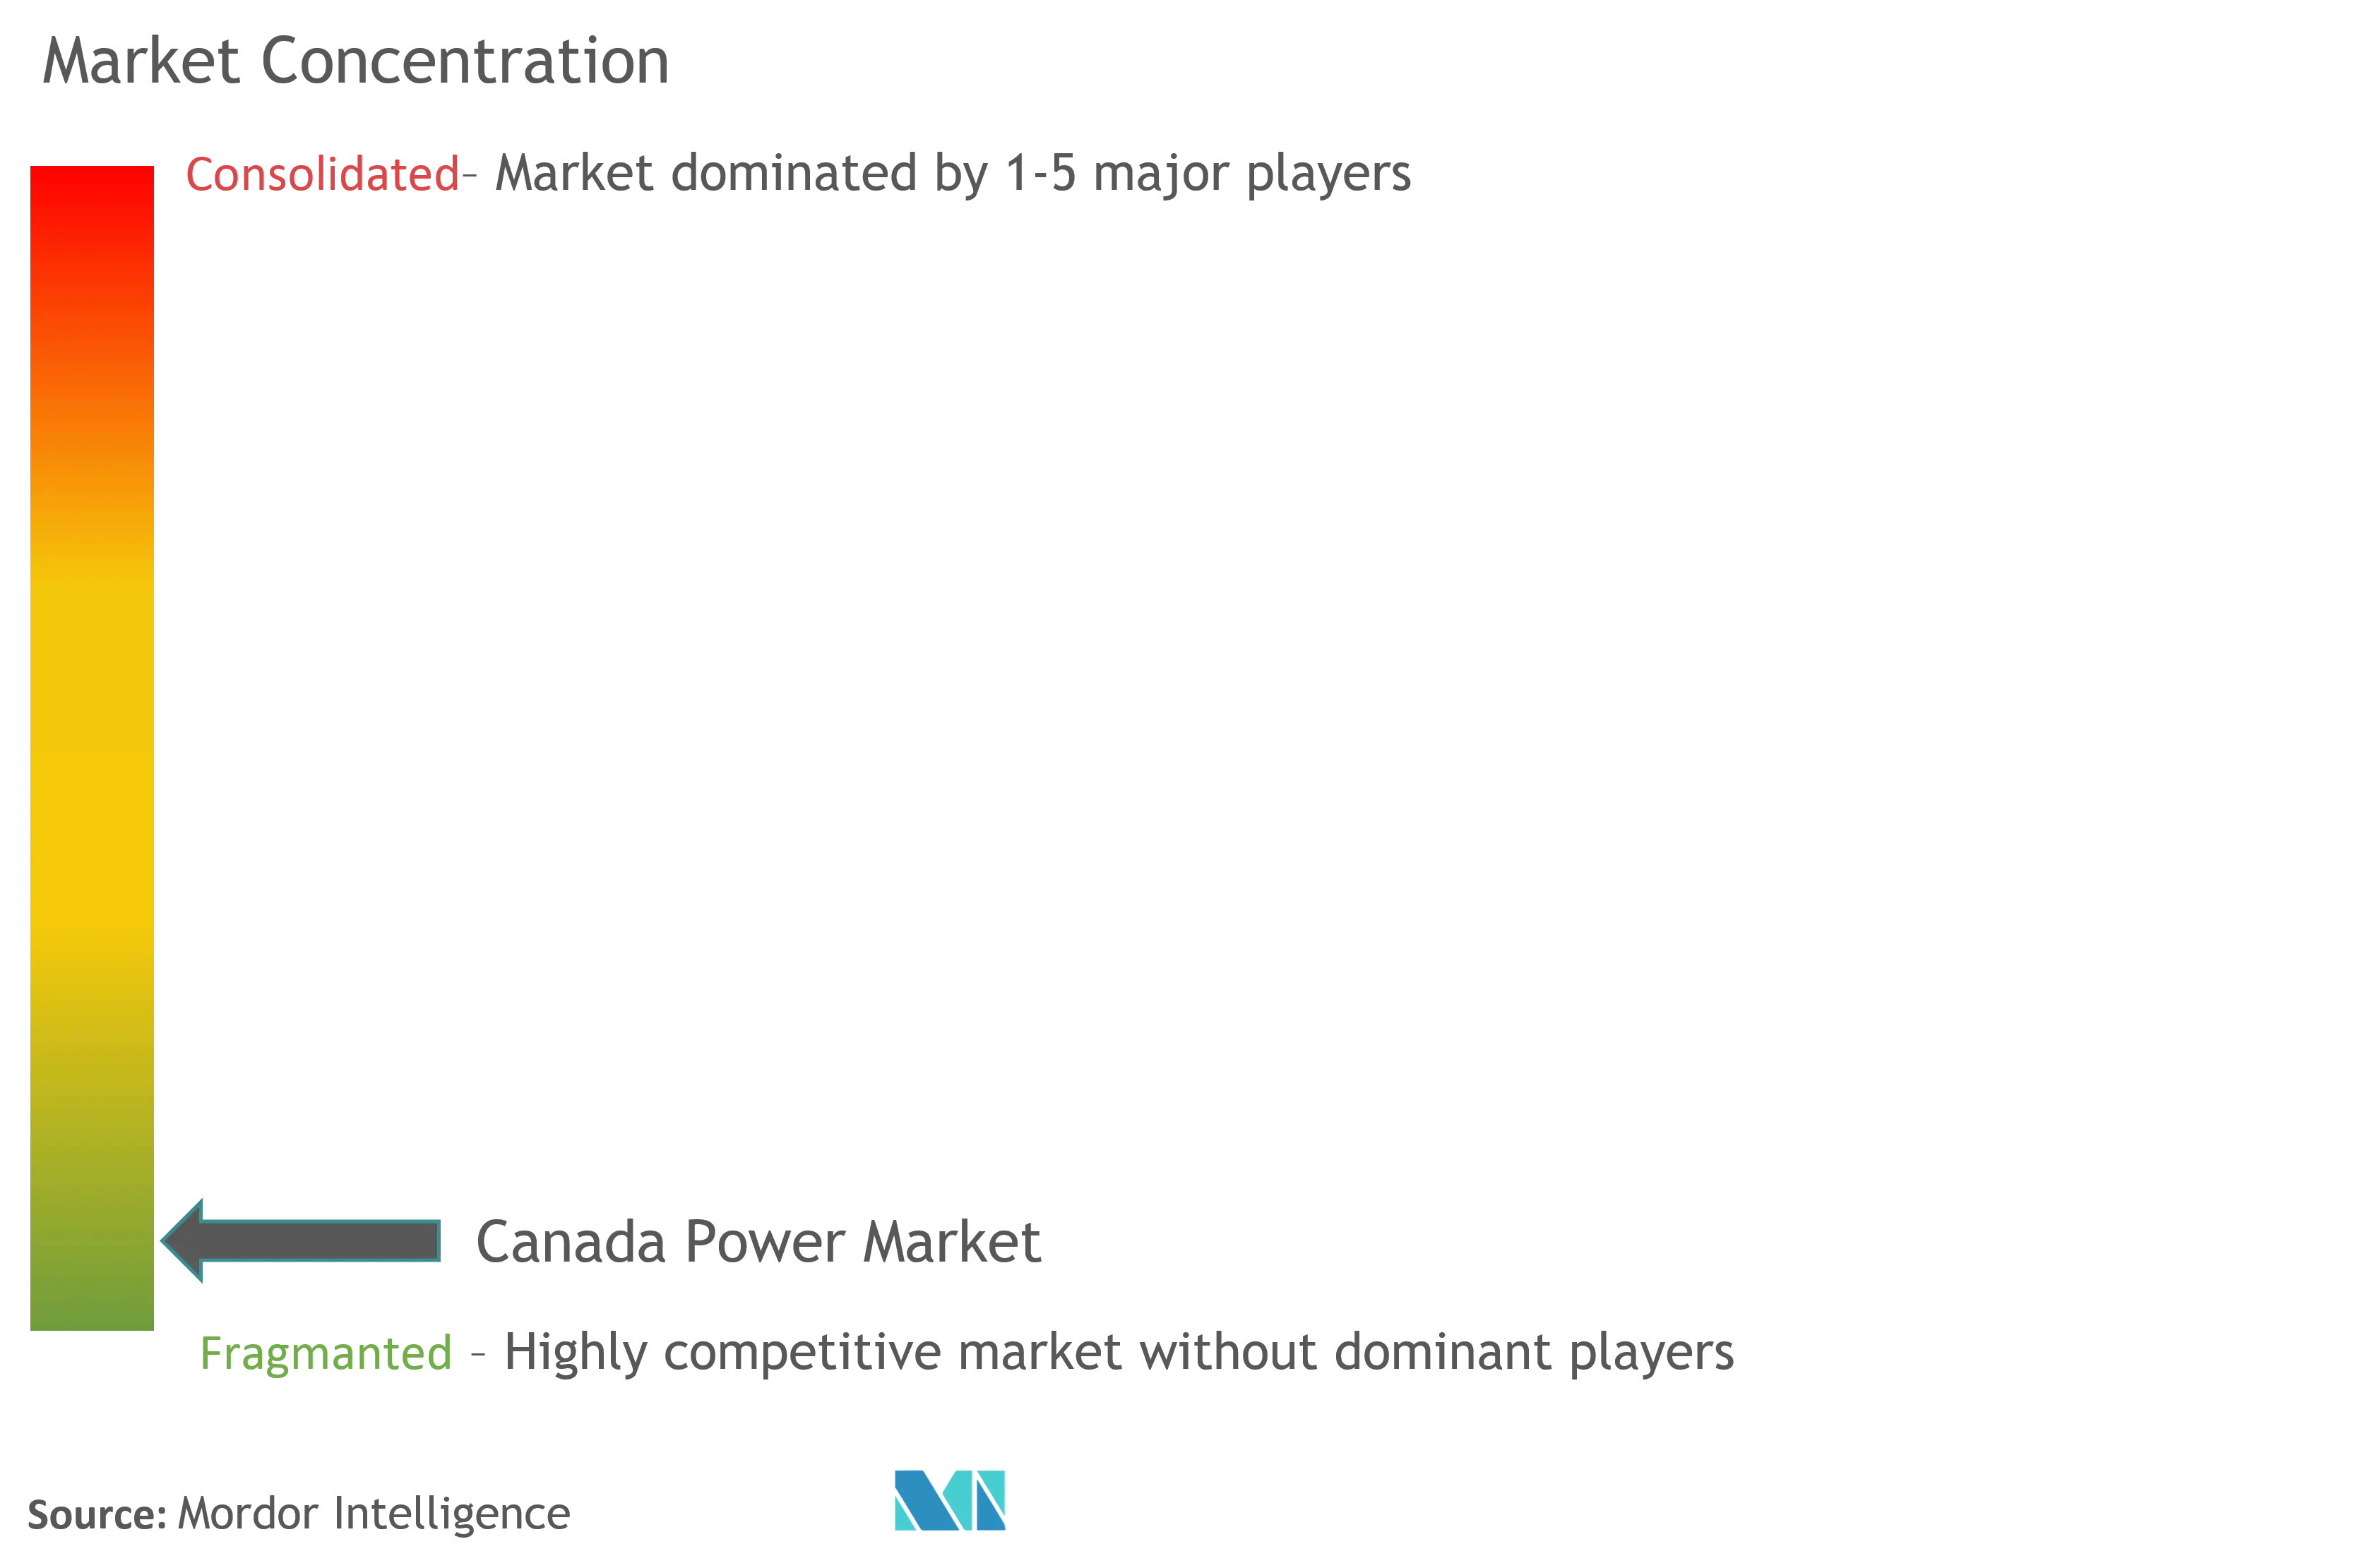 Canada Power Market Concentration